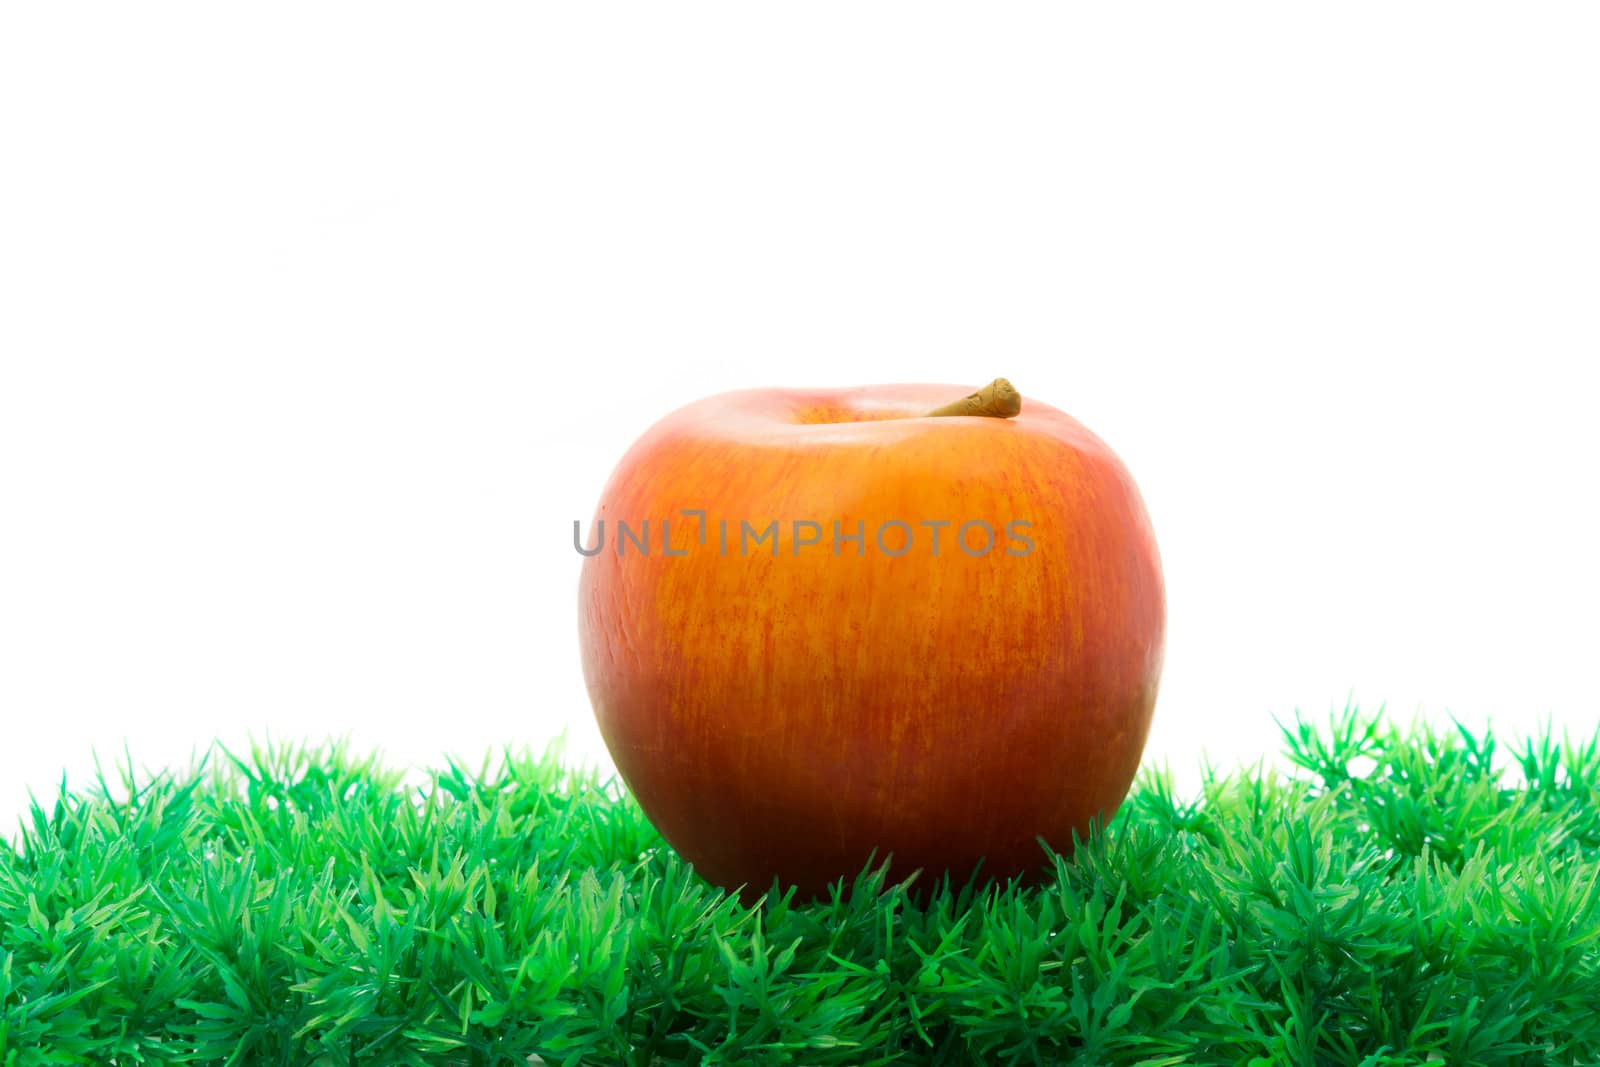 Red apple in green artificial grass by Sorapop